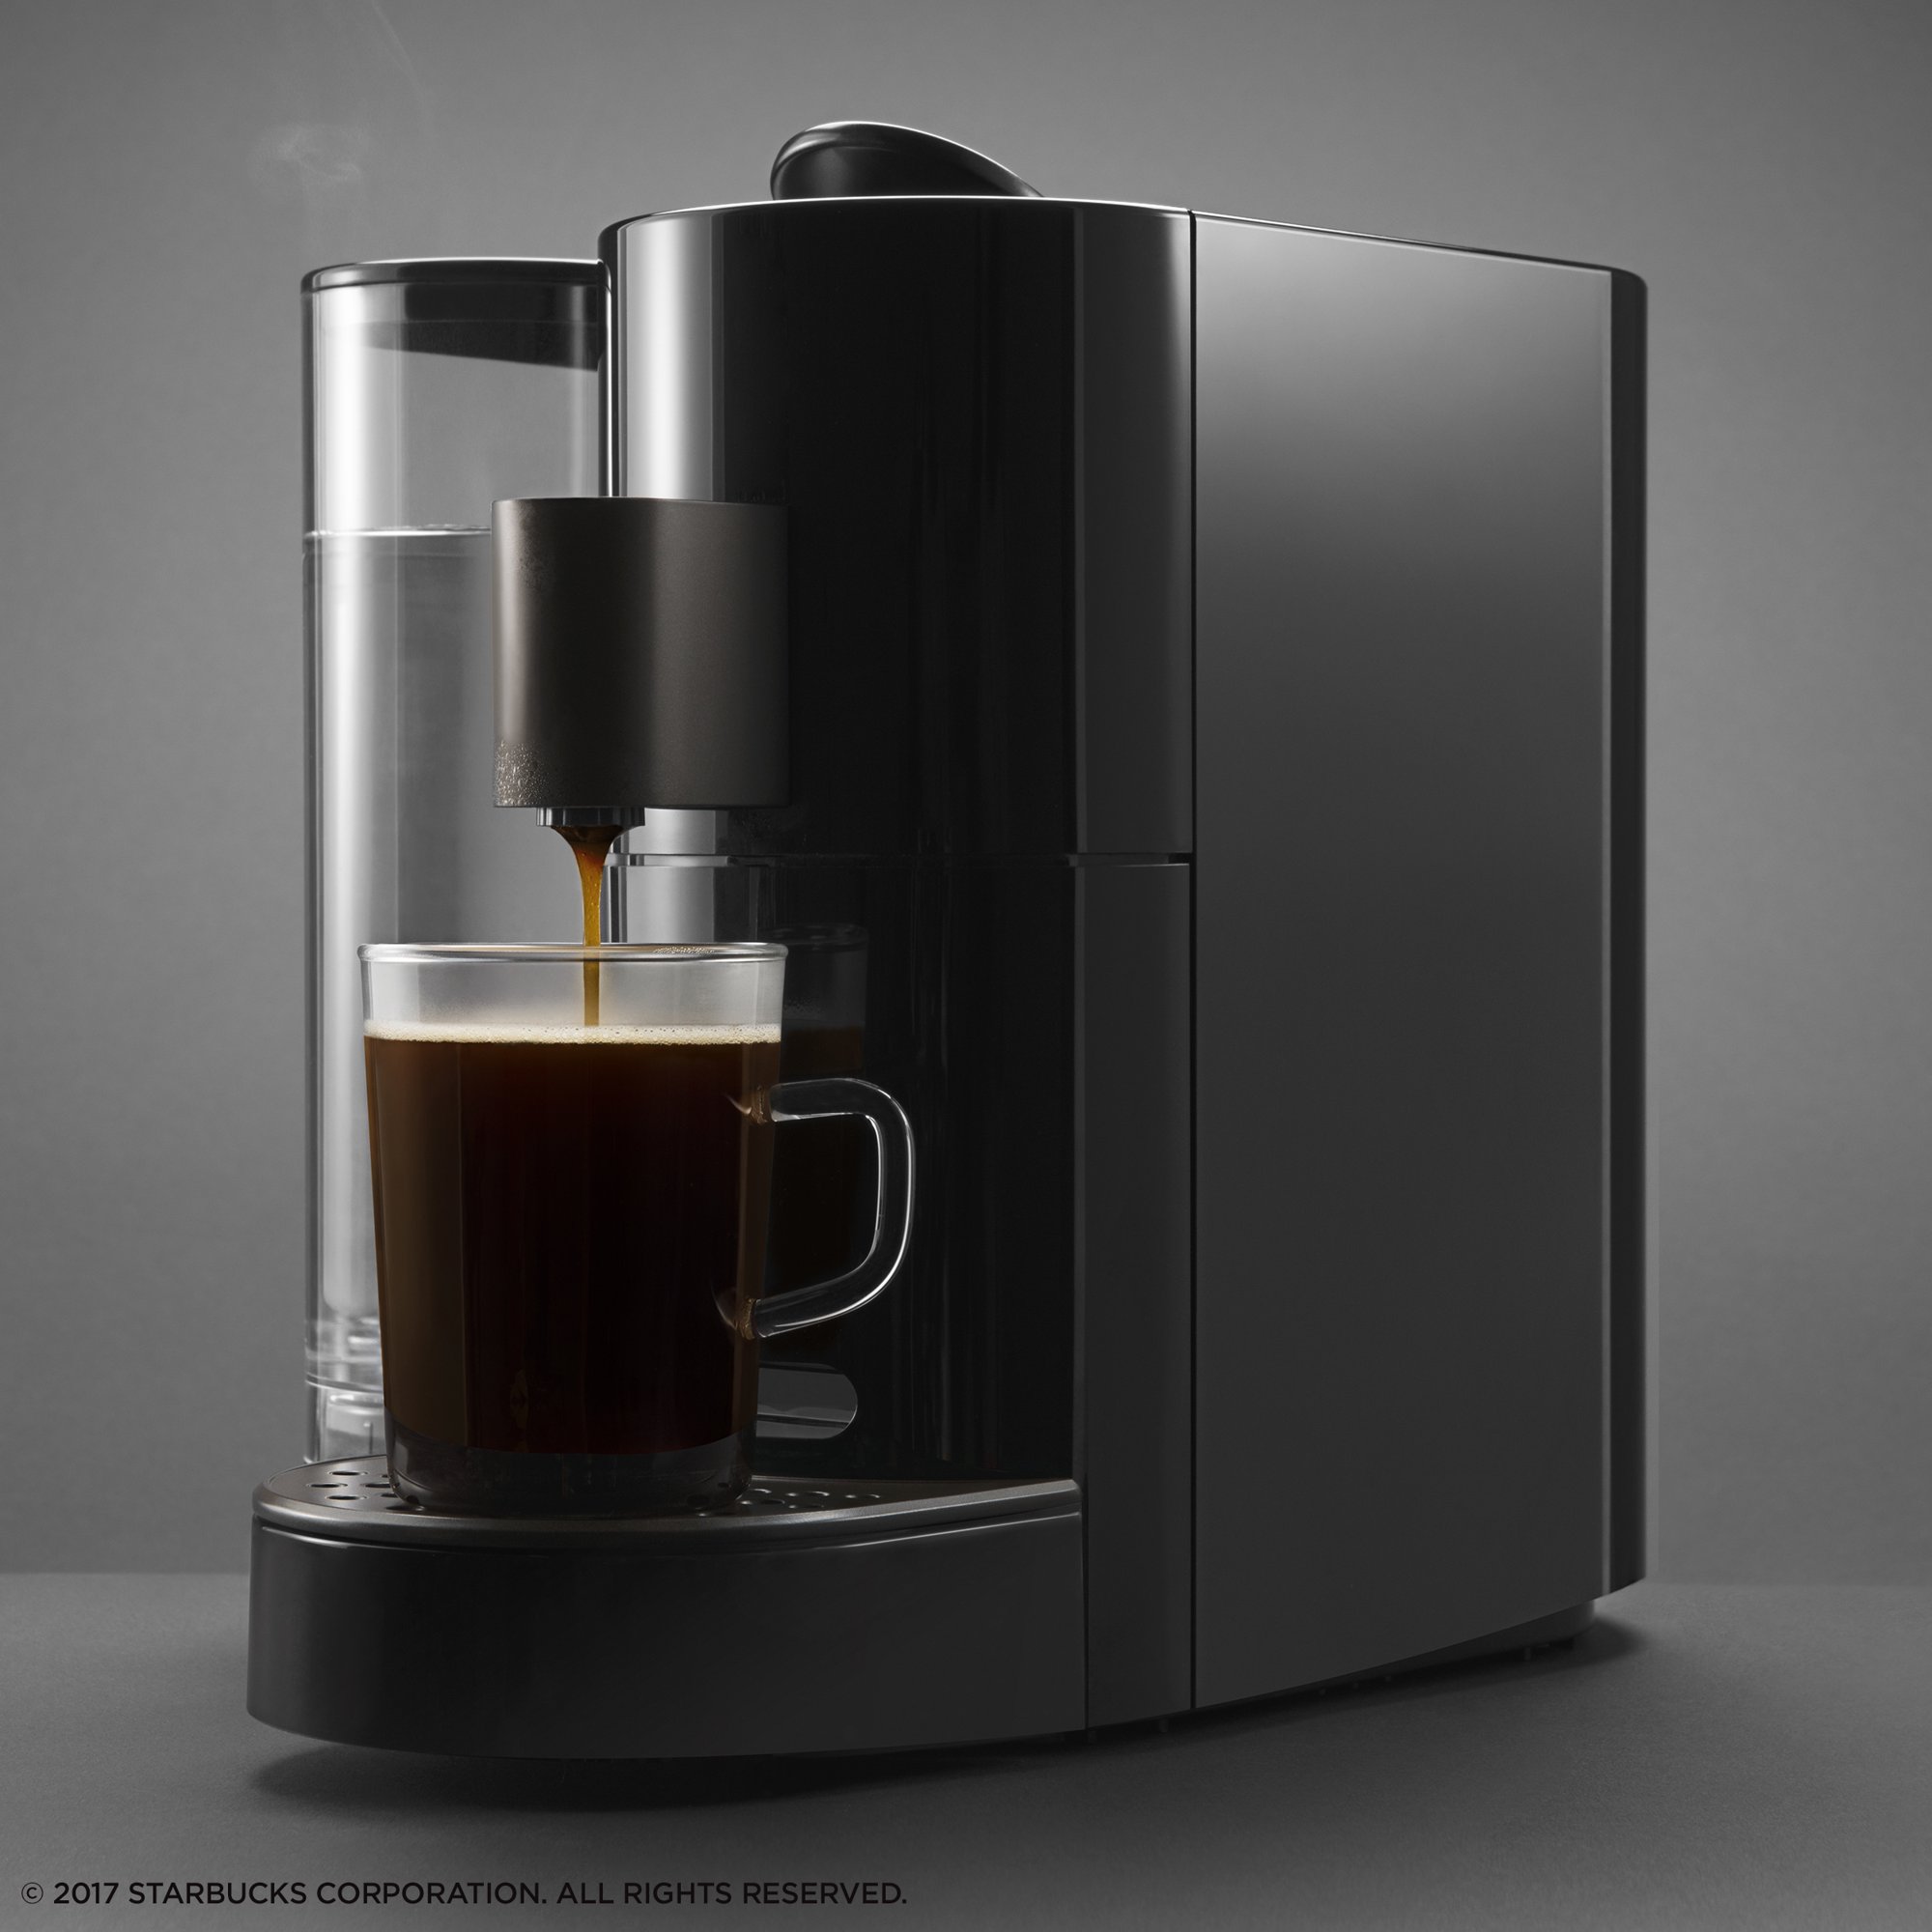 https://theceocreative.com/wp-content/uploads/2022/11/Verismo-System-Coffee-Machine-By-Starbucks-2.jpeg